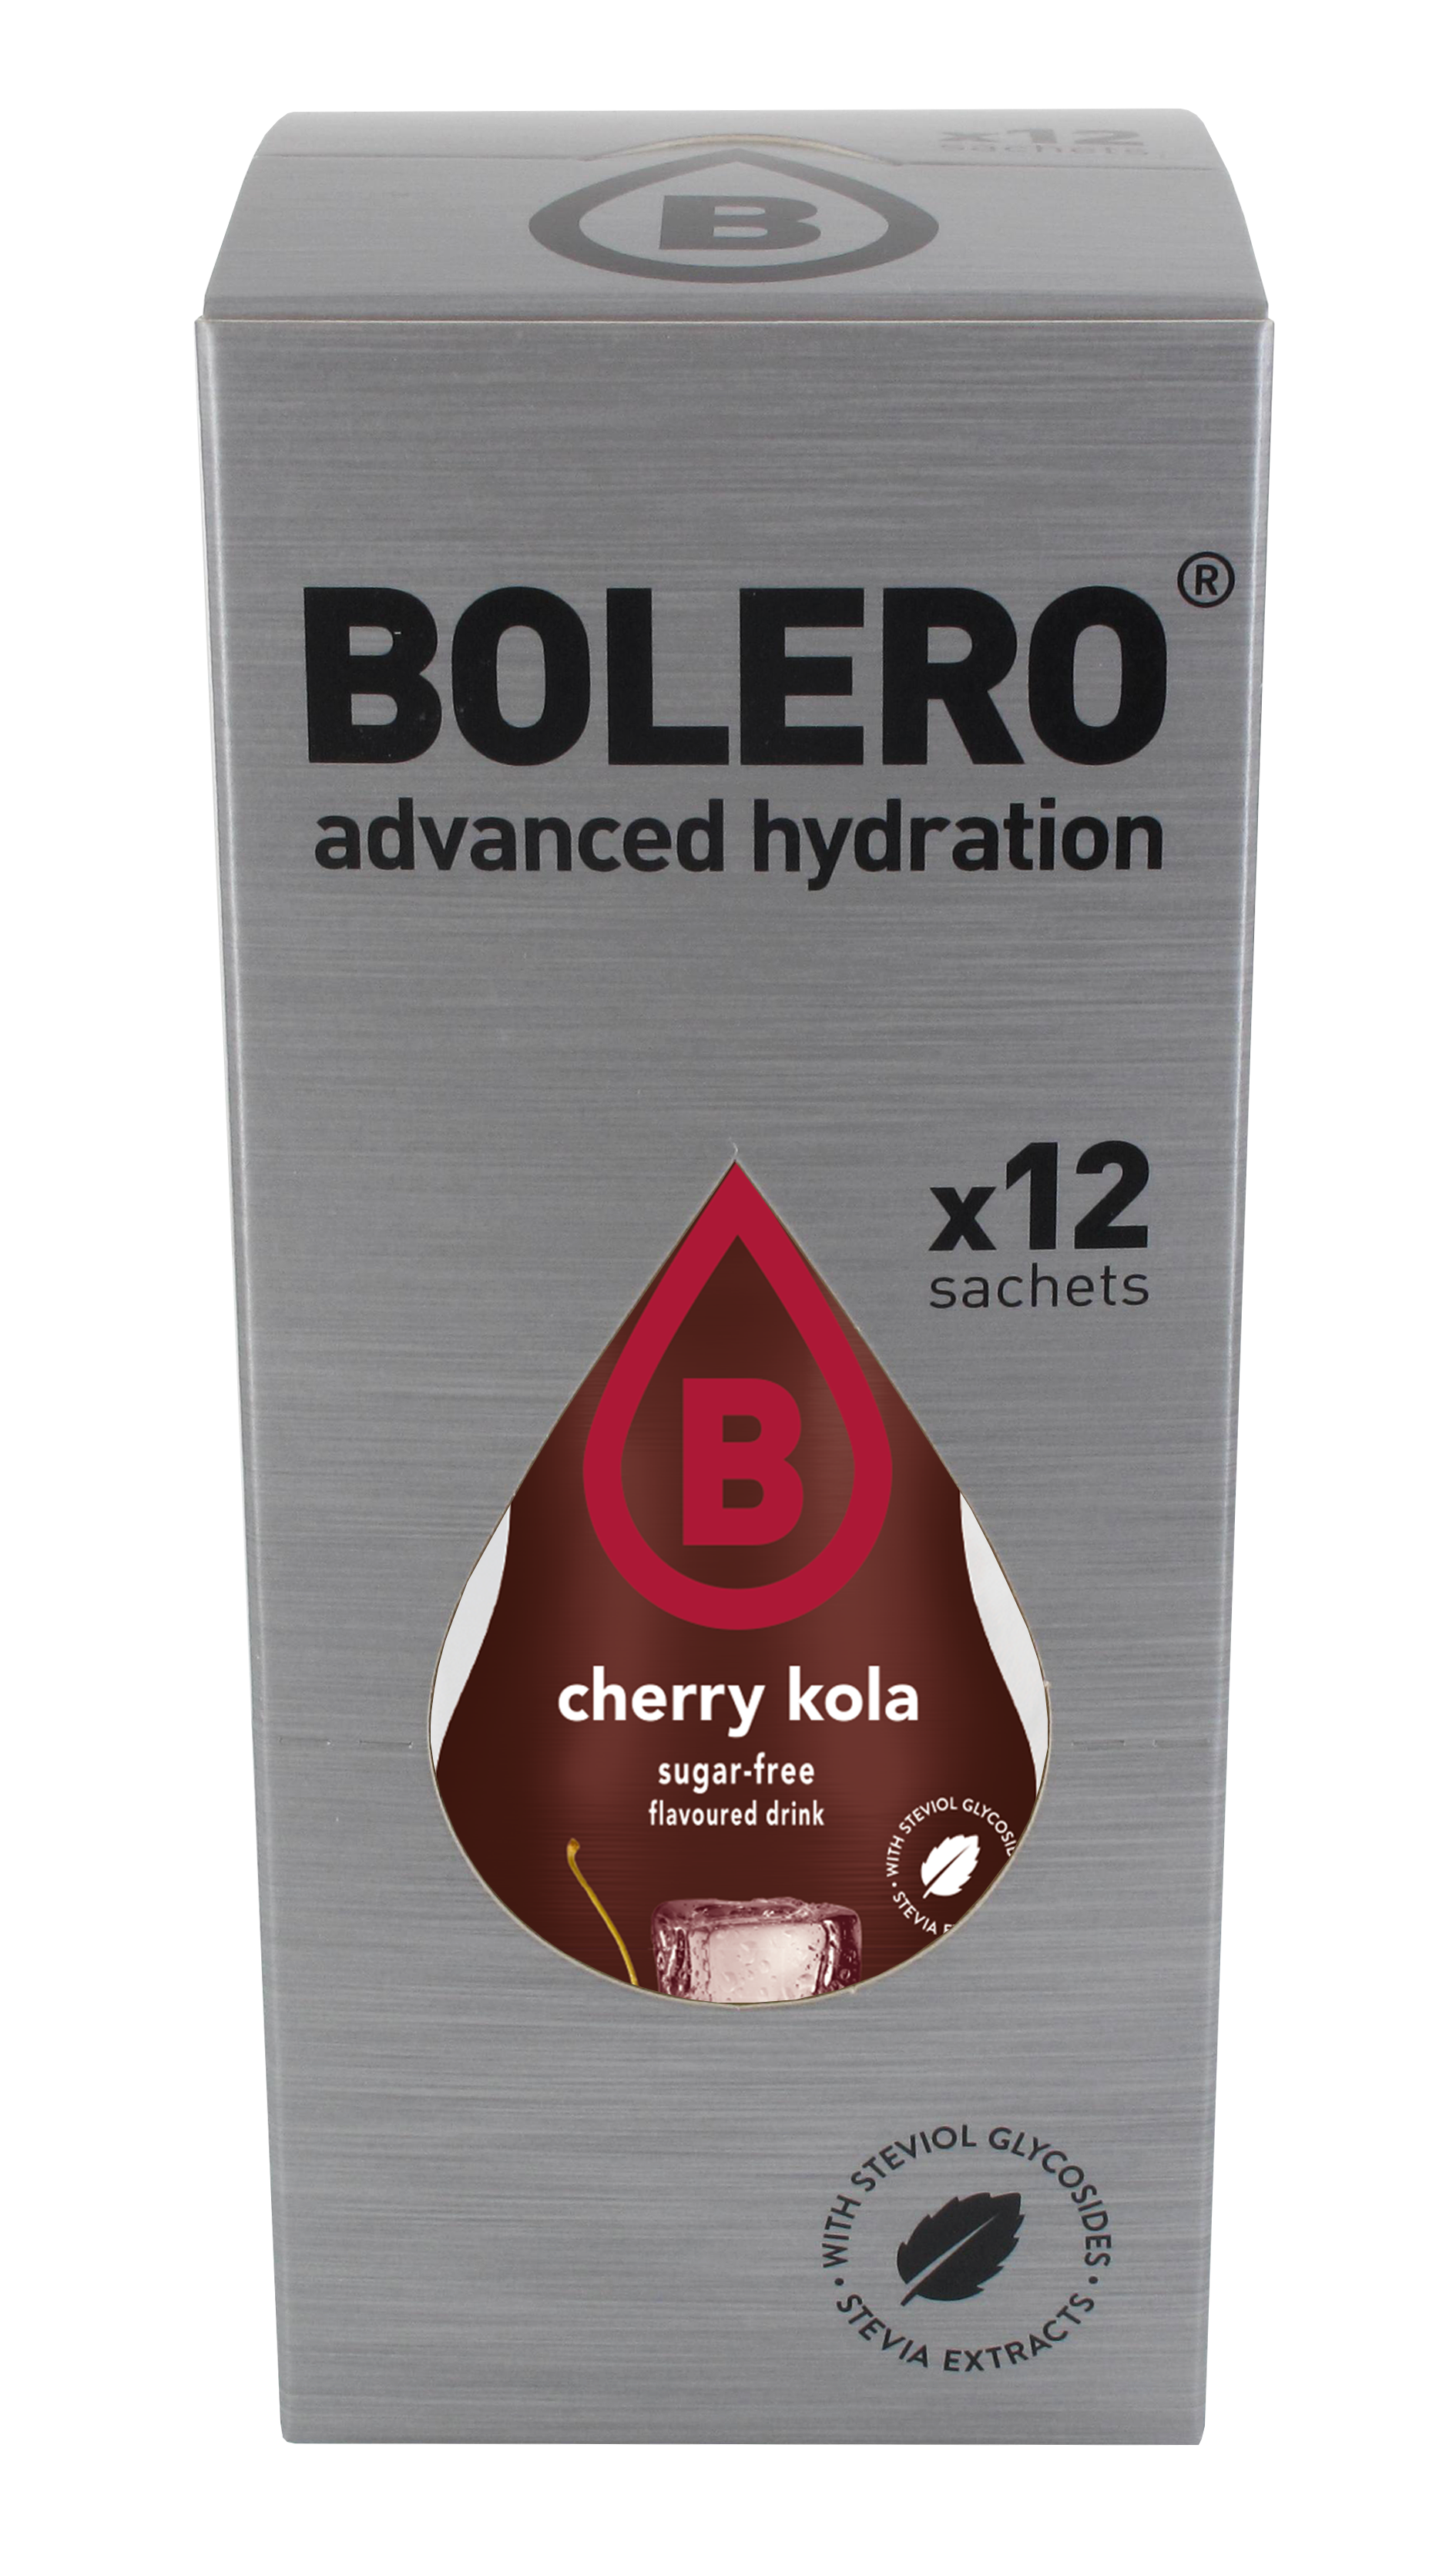 boîte bolero cherry kola - 12 x 9g